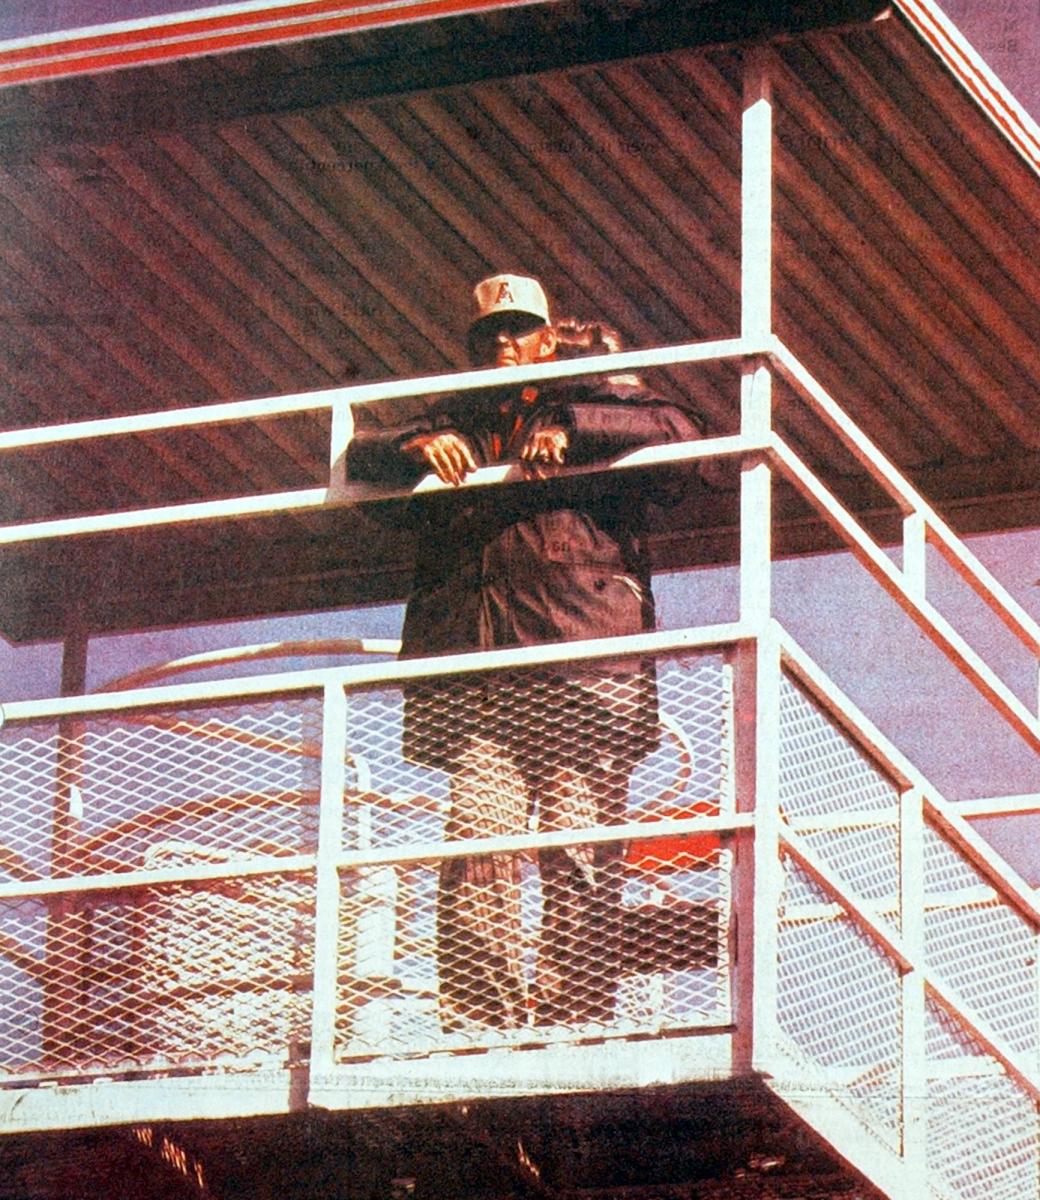 Paul W. "Bear" Bryant in his practice tower